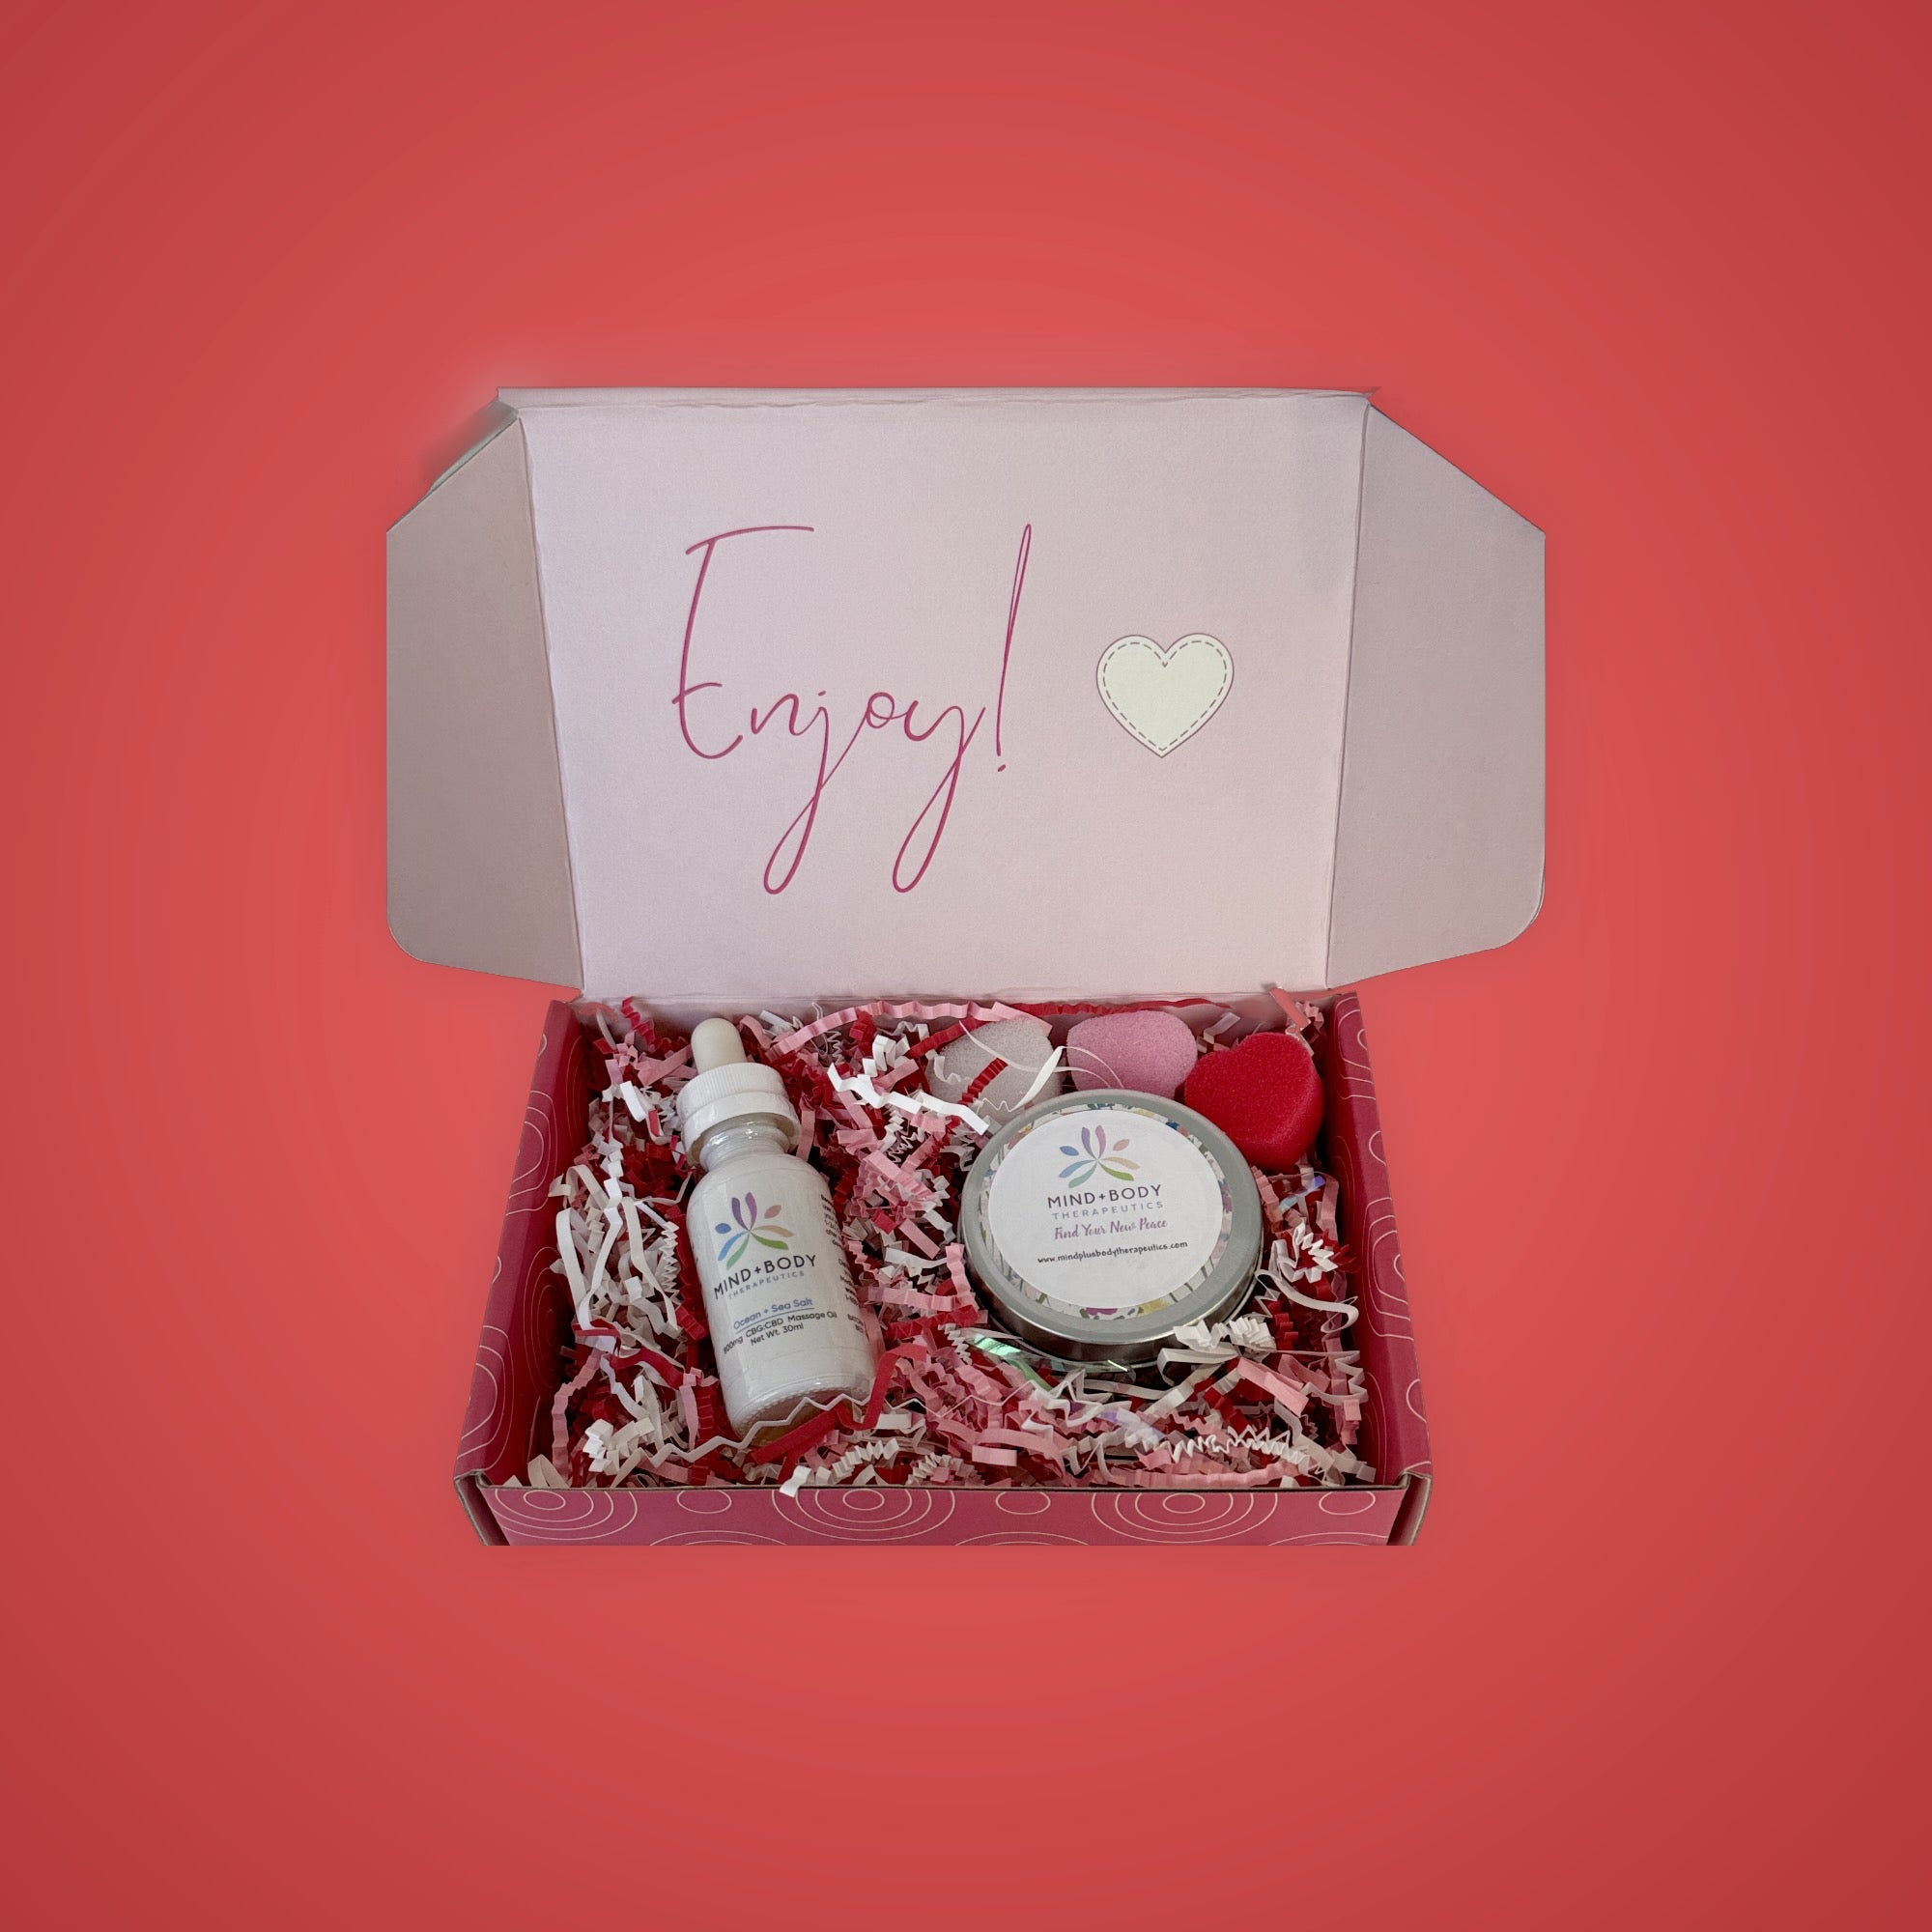 Mind+Body CBG:CBD Massage Oil & Candle Valentine's Gift Set